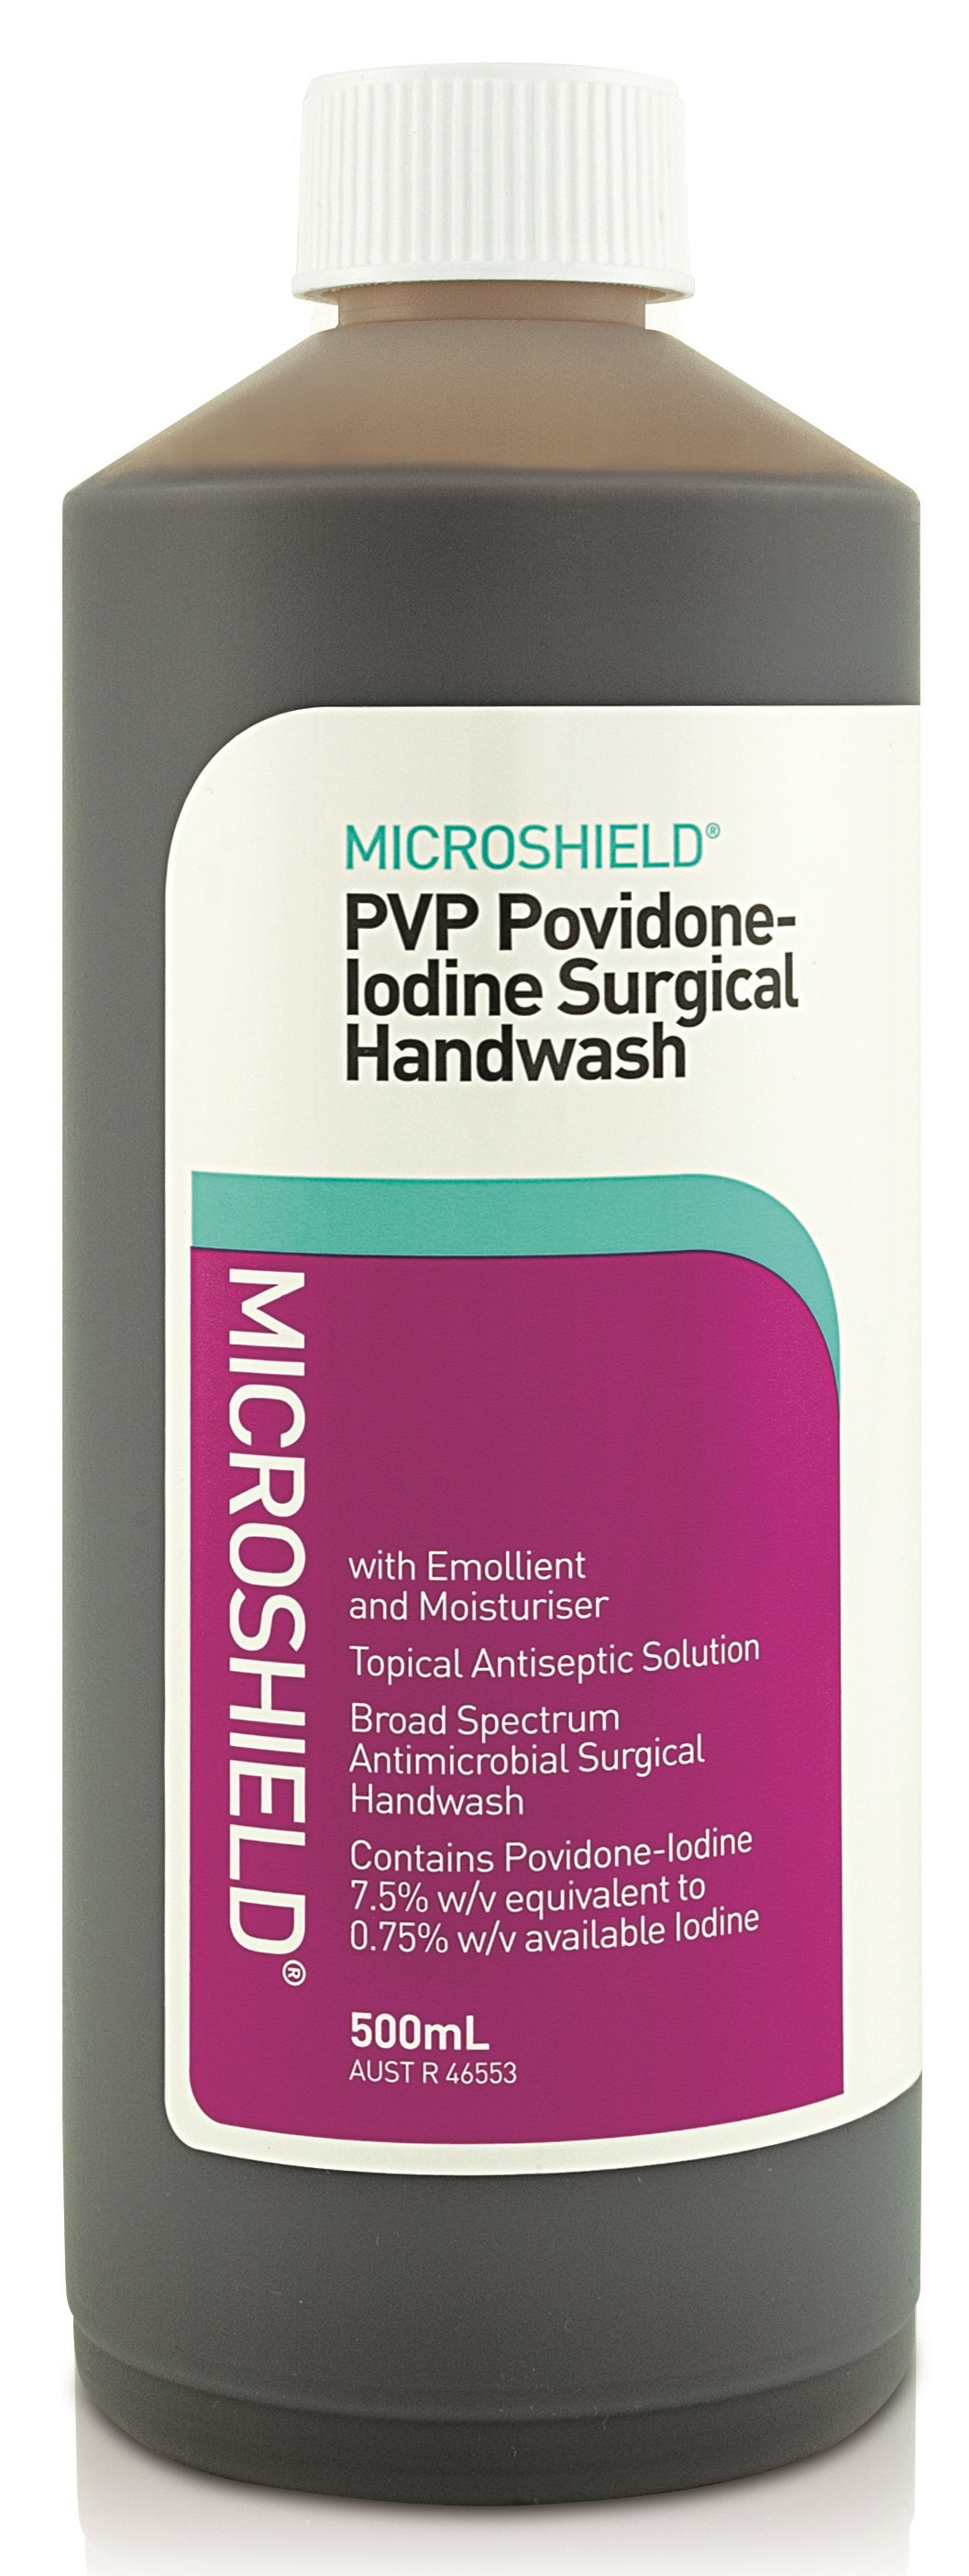 Microshield Povidone-Iodine Surgical Handwash 500ml